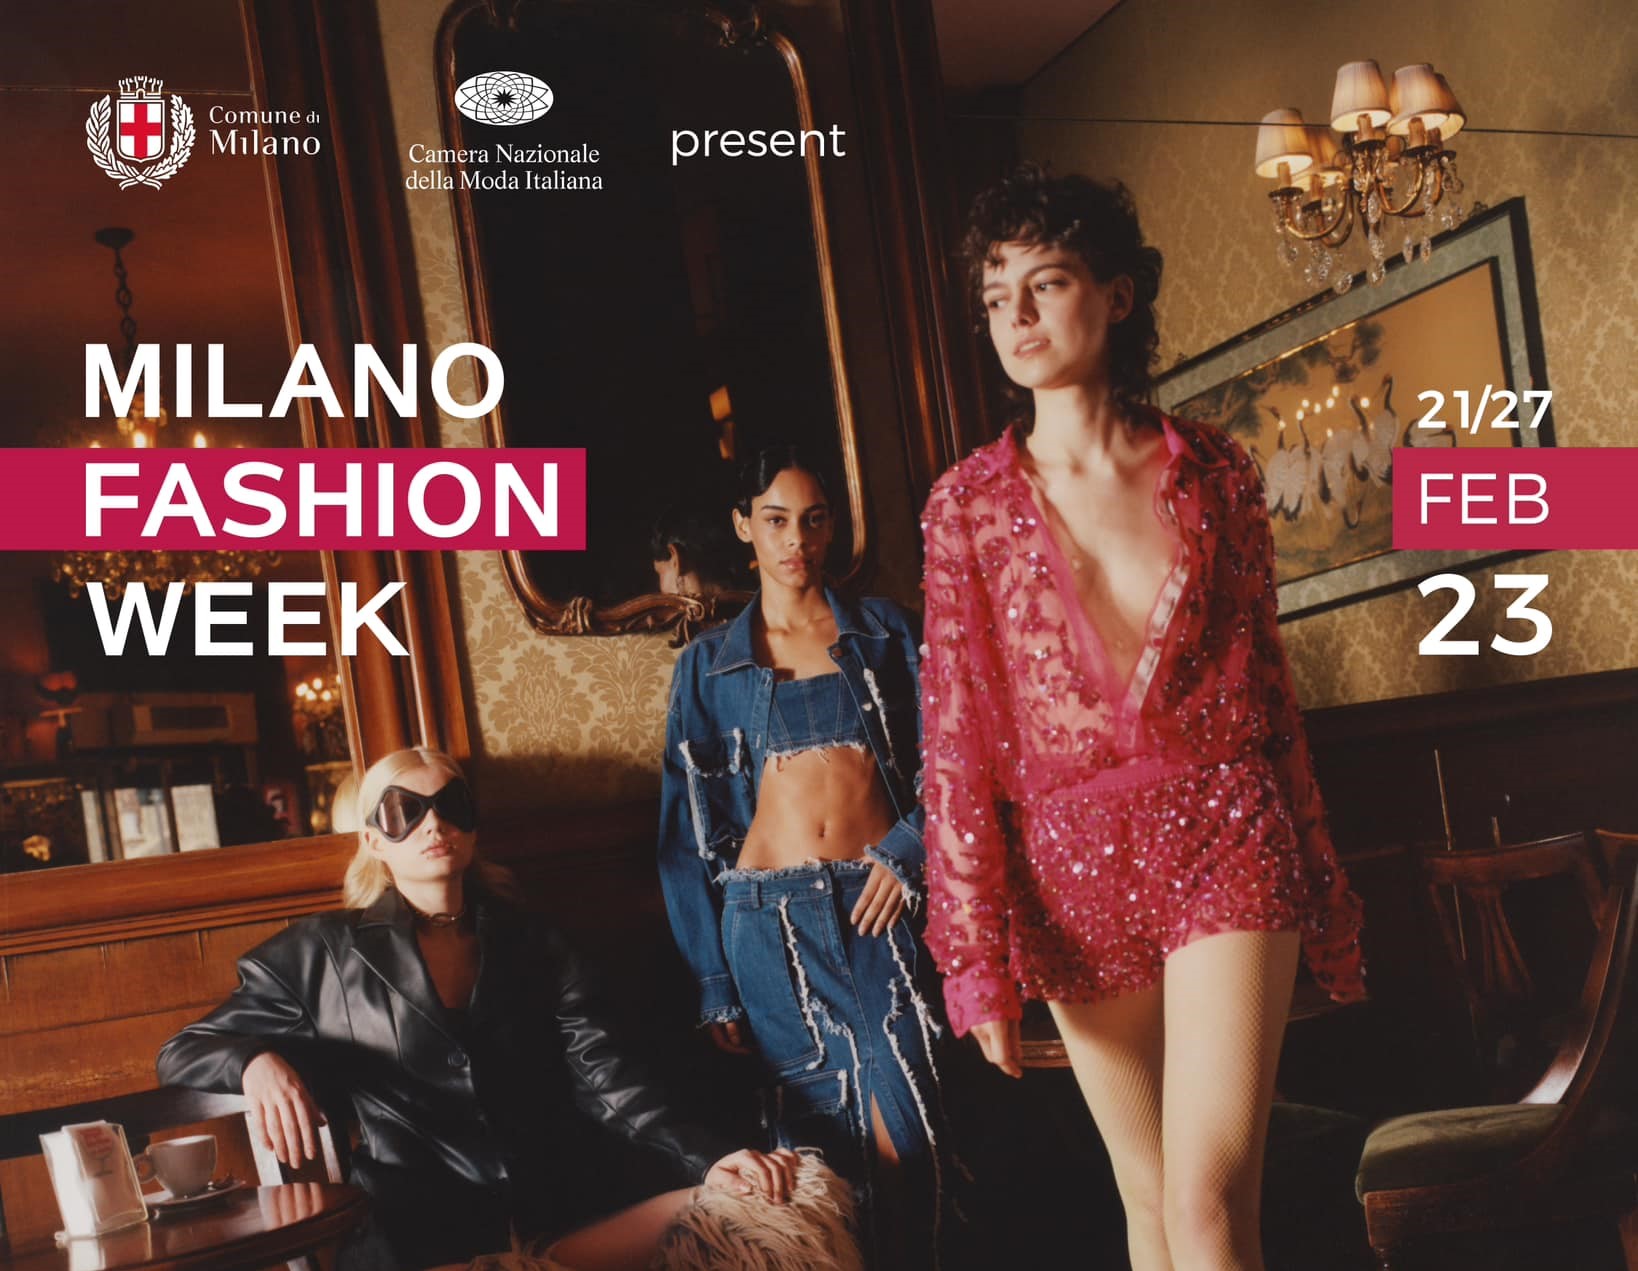 Al via la Milano Fashion Week 2023, da oggi fino al 27 febbraio ...